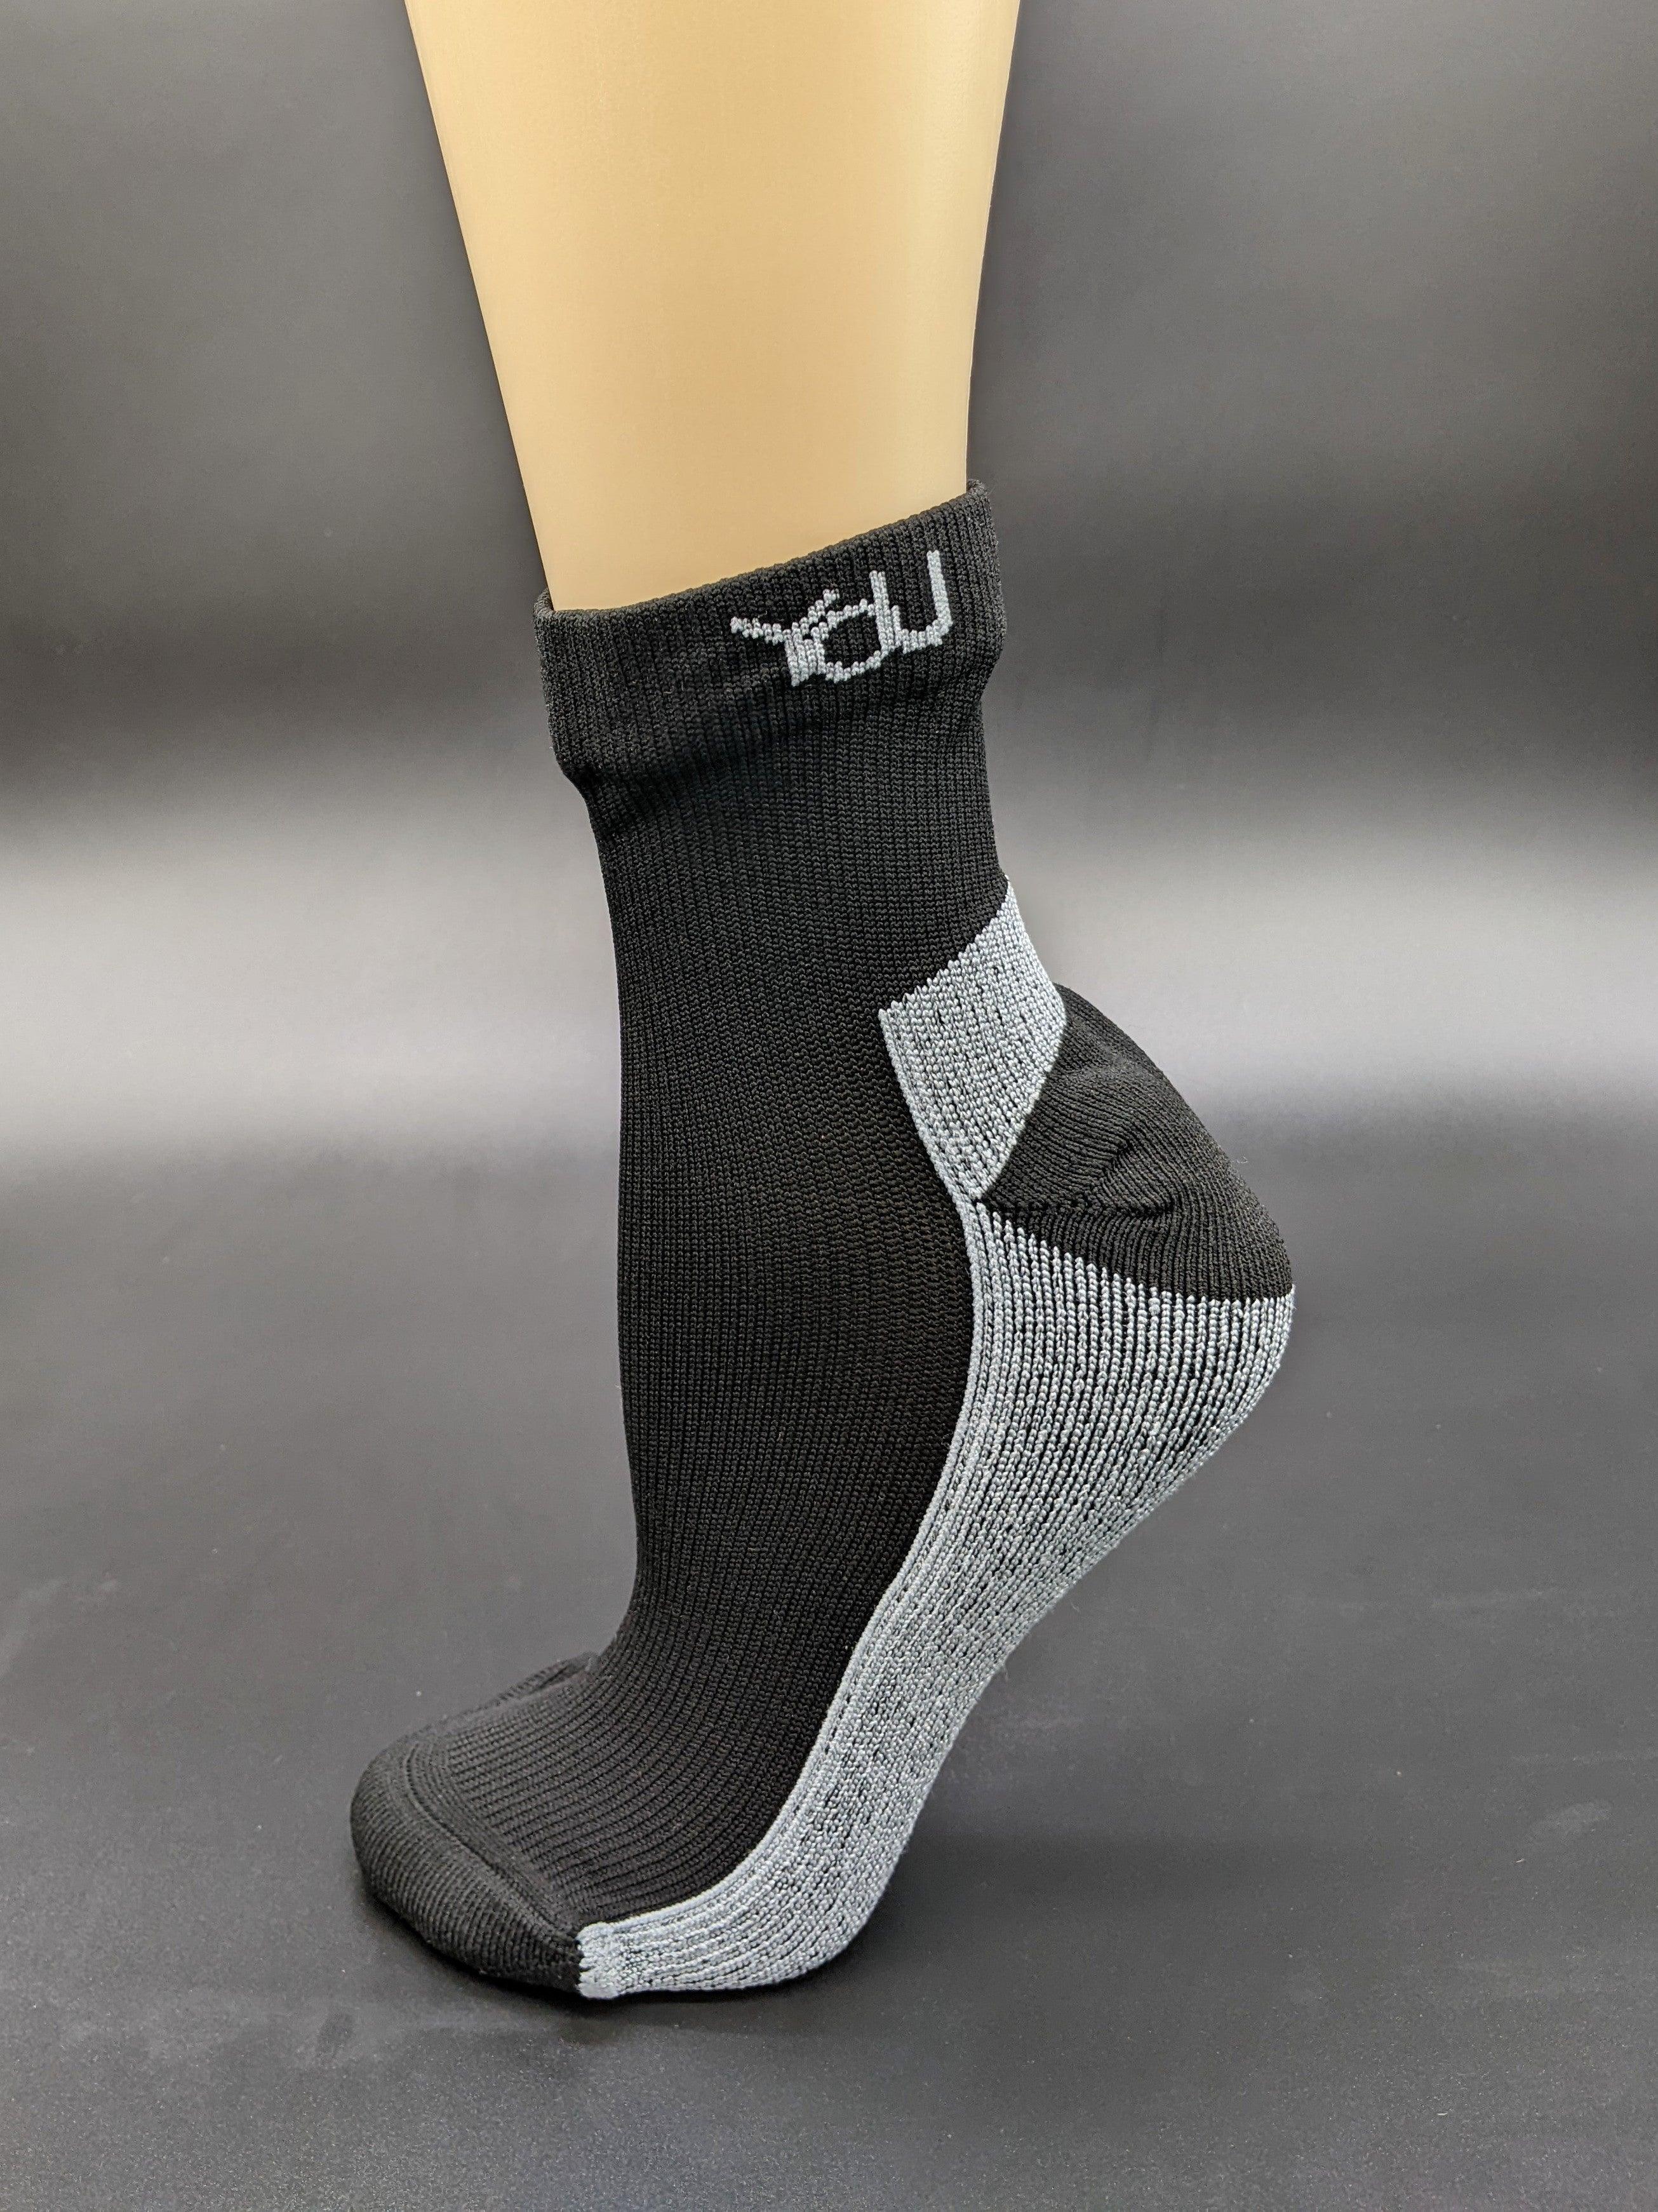 Refeel Plus Size Compression Socks Wide Calf For Women & Men 20-30